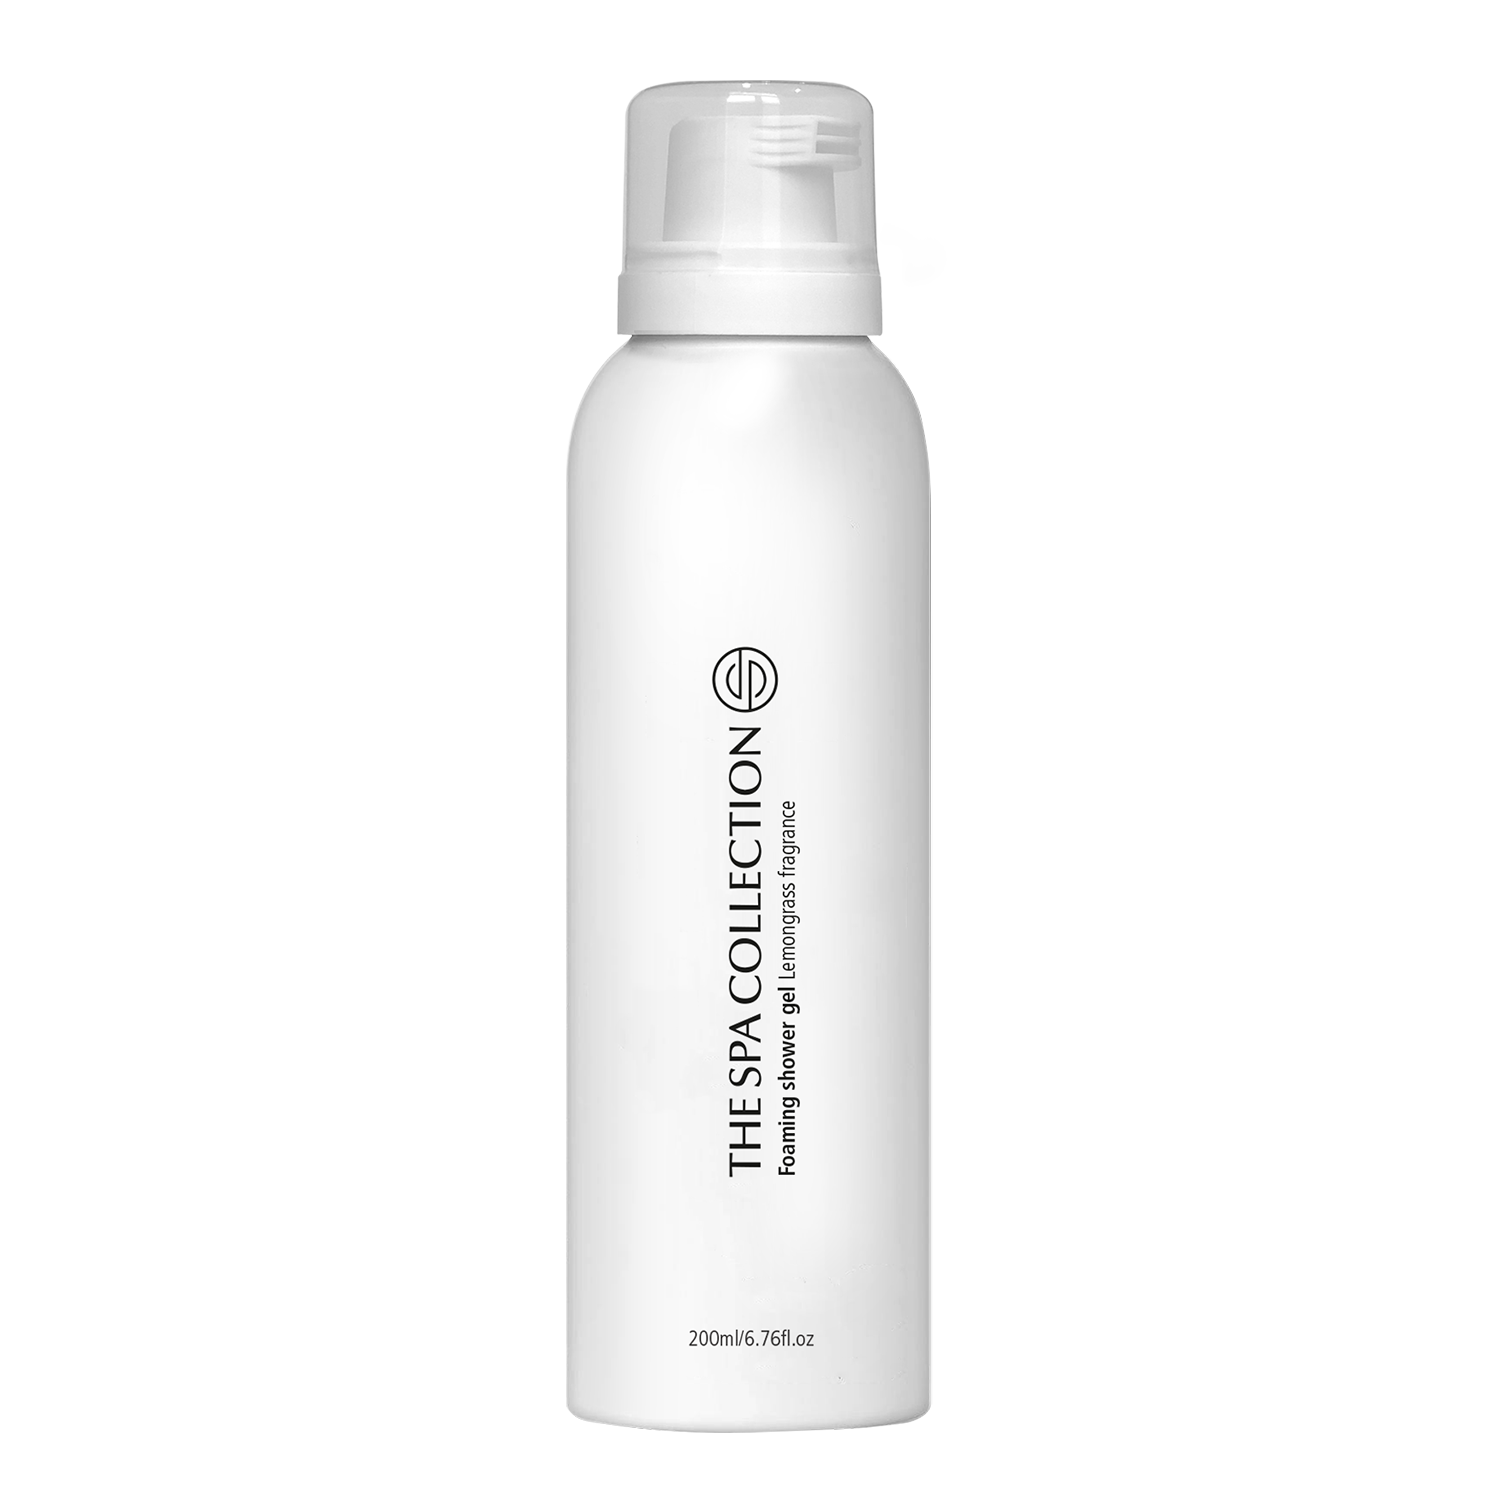 Shower foam - 200ml bottle - The Spa Collection Lemongrass